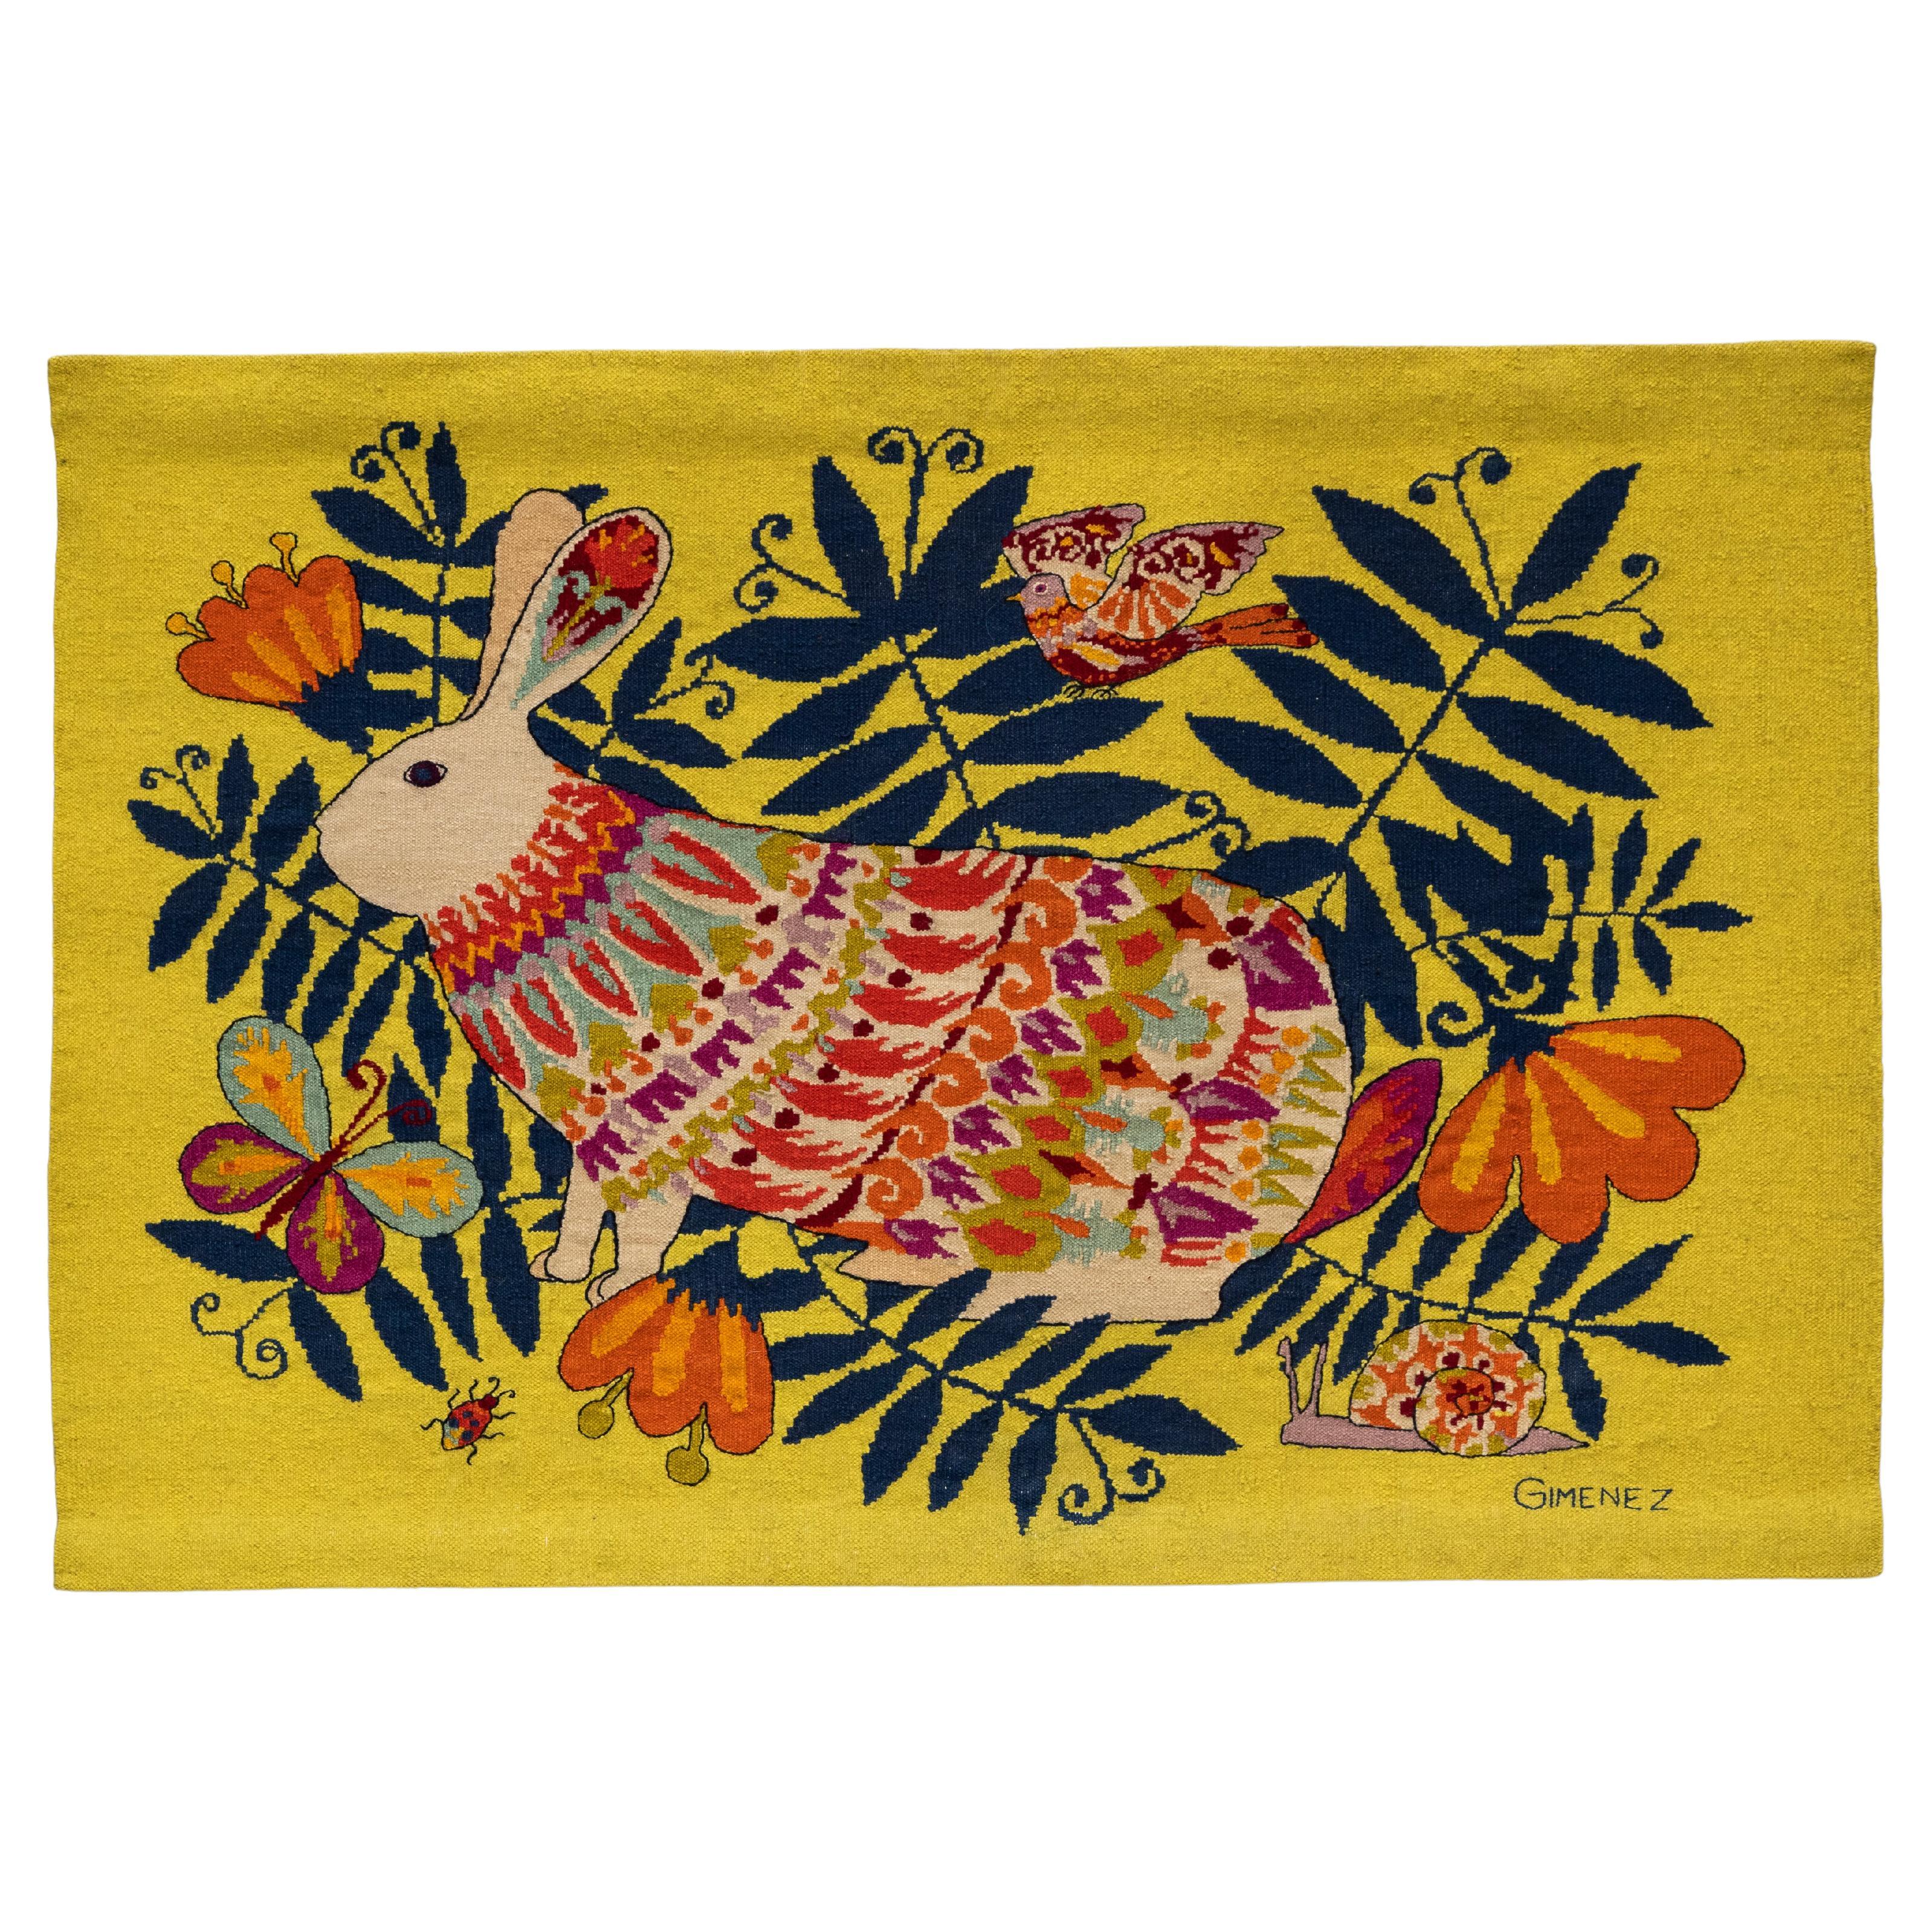 Tapestry by Edgardo Giménez,  "Conejo", Argentina, 1967.